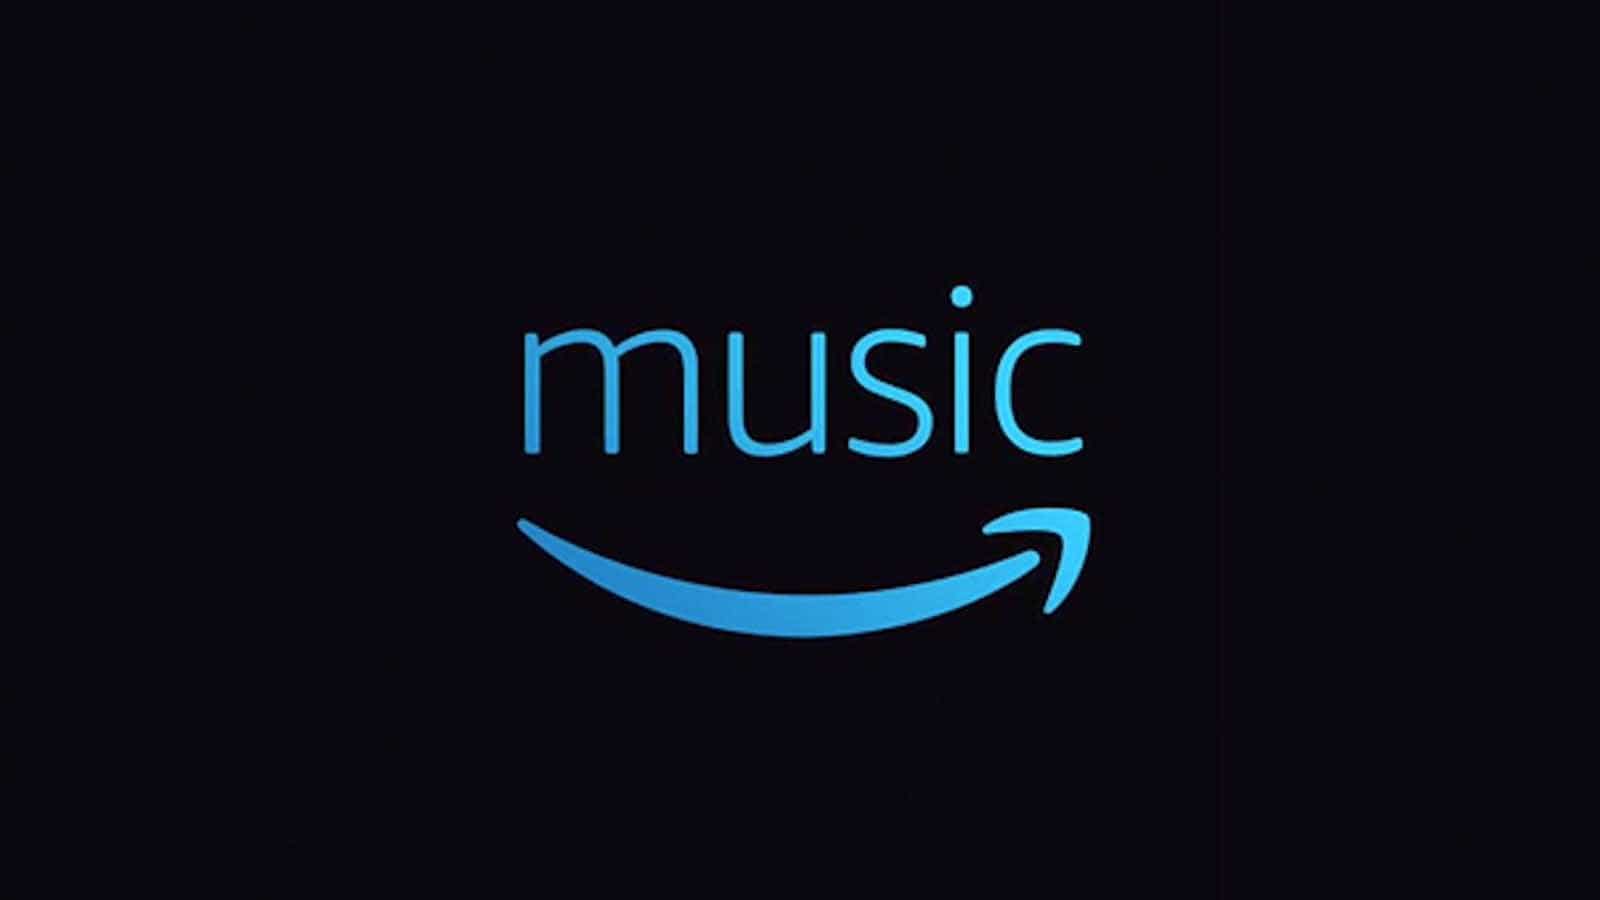 Amazon Music Logo - Amazon adds free music through Amazon Music to smartphones and TVs